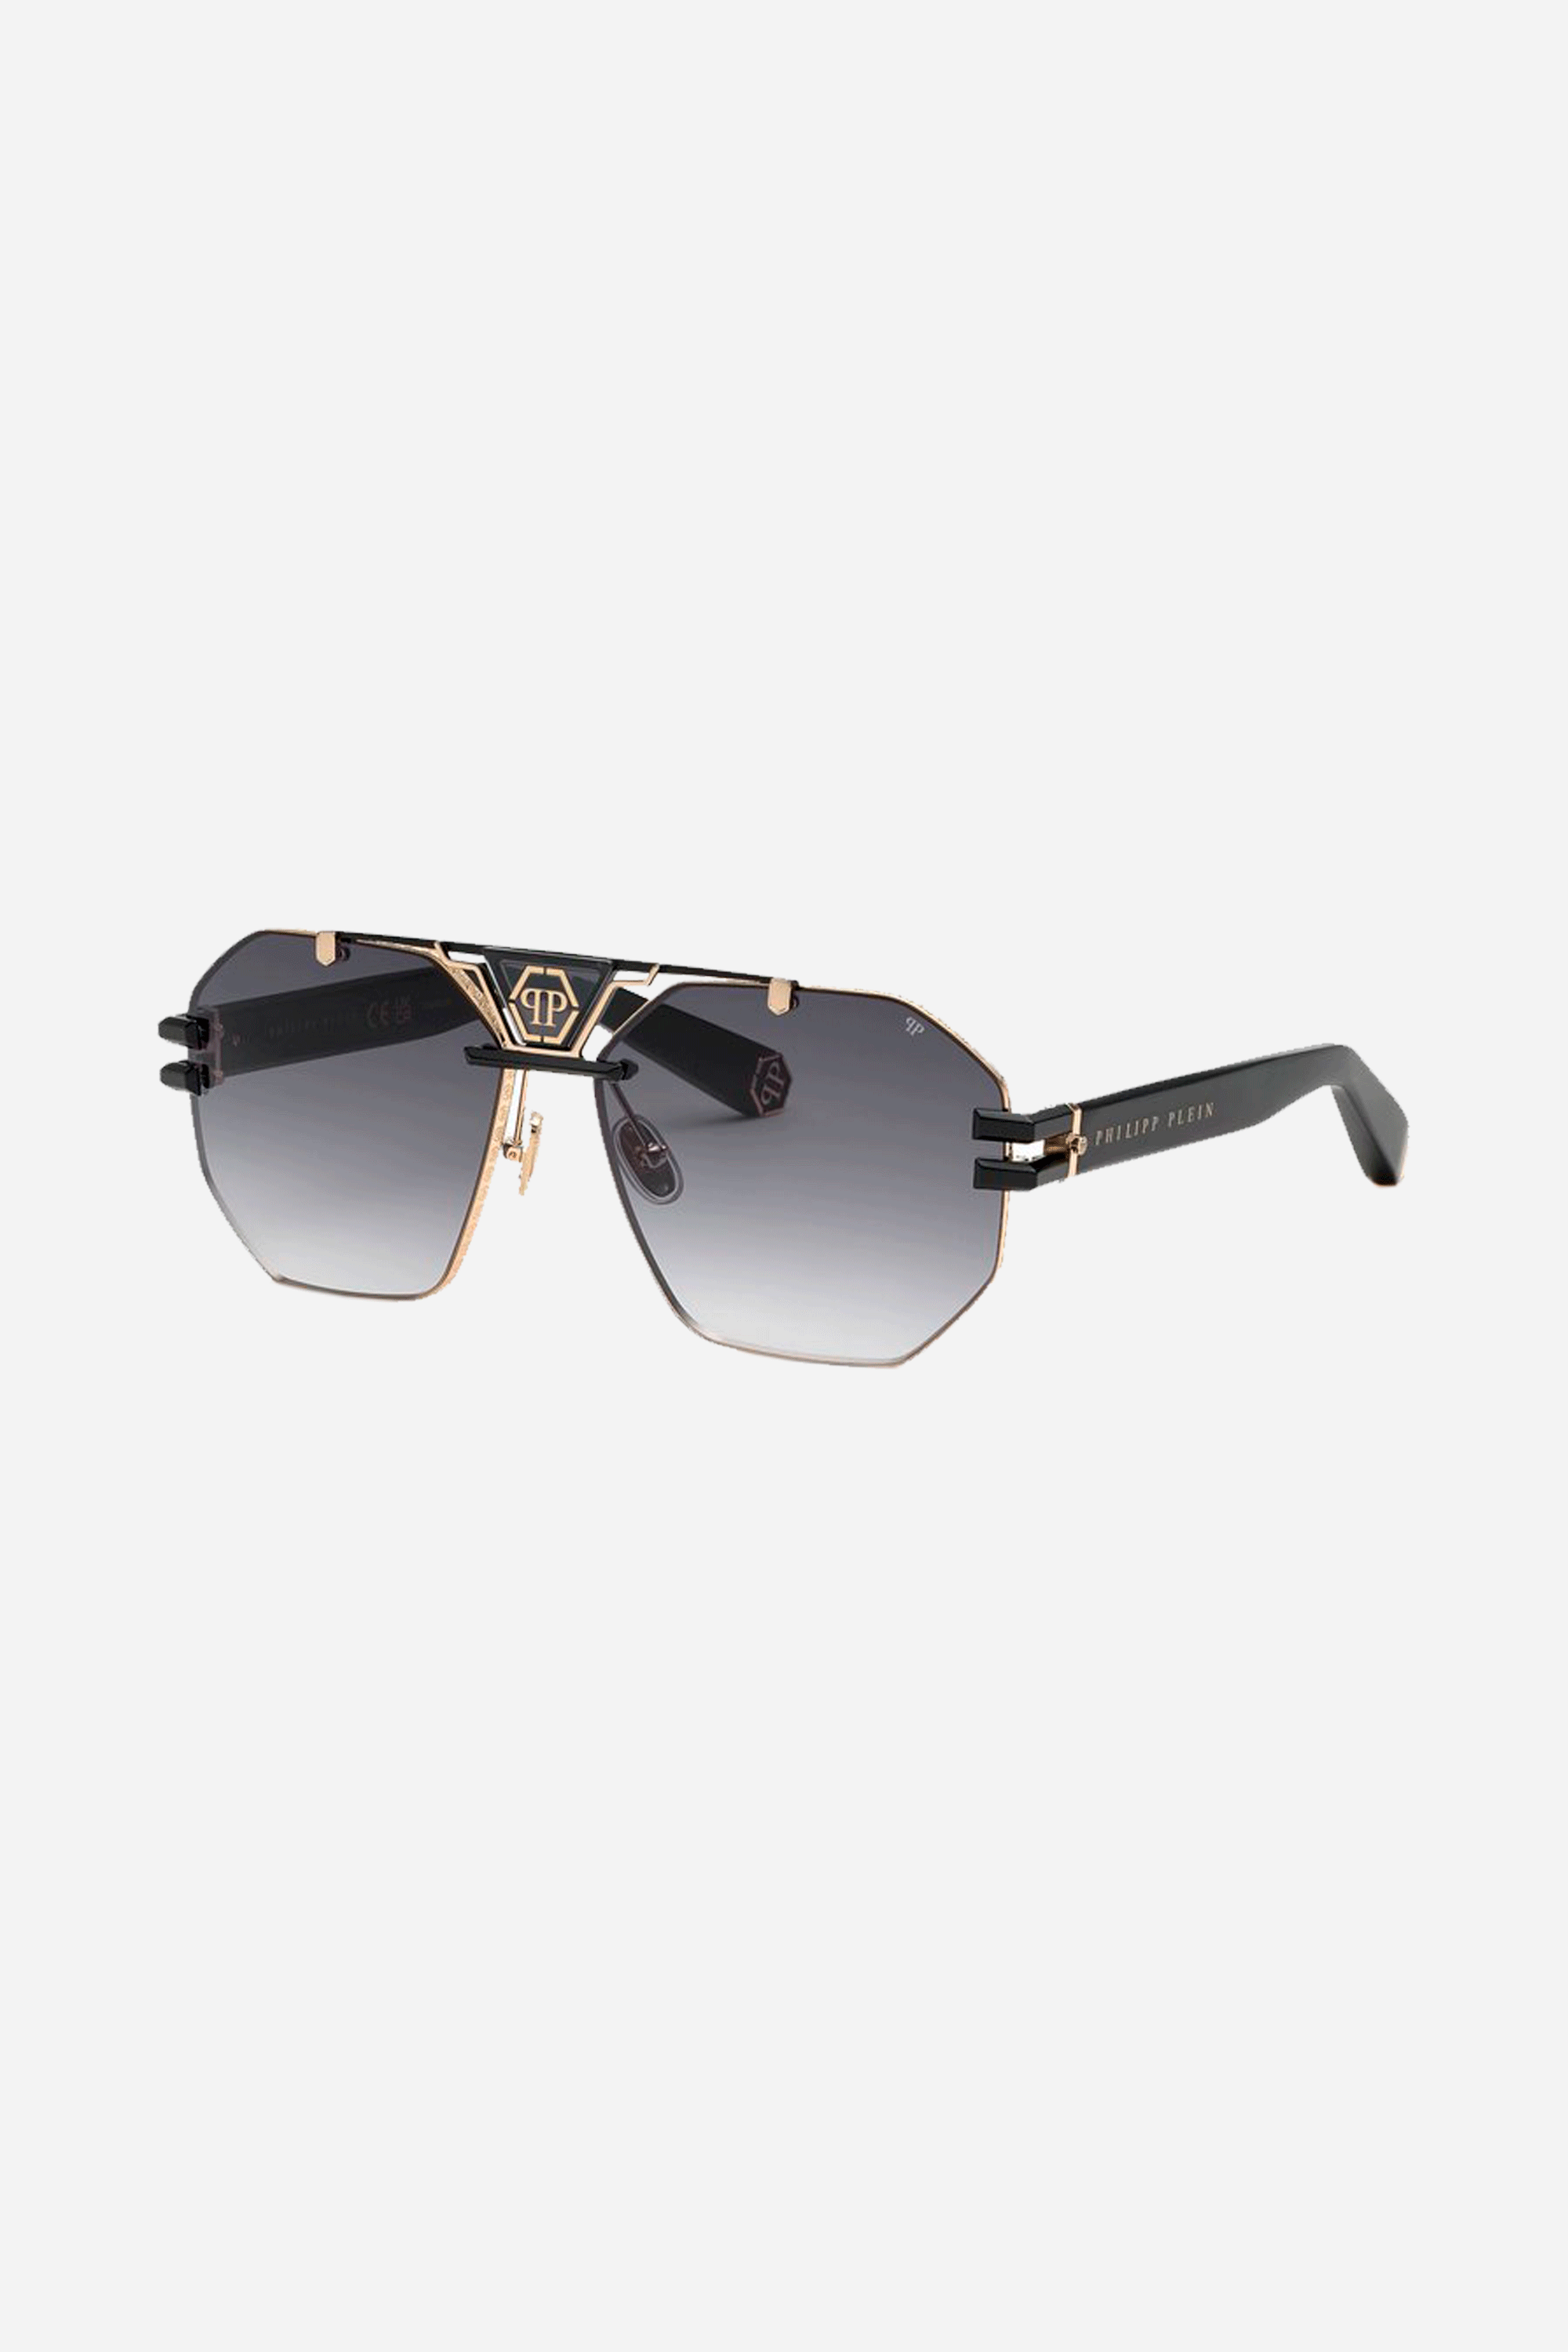 Philipp Plein metal grey sunglasses - Eyewear Club